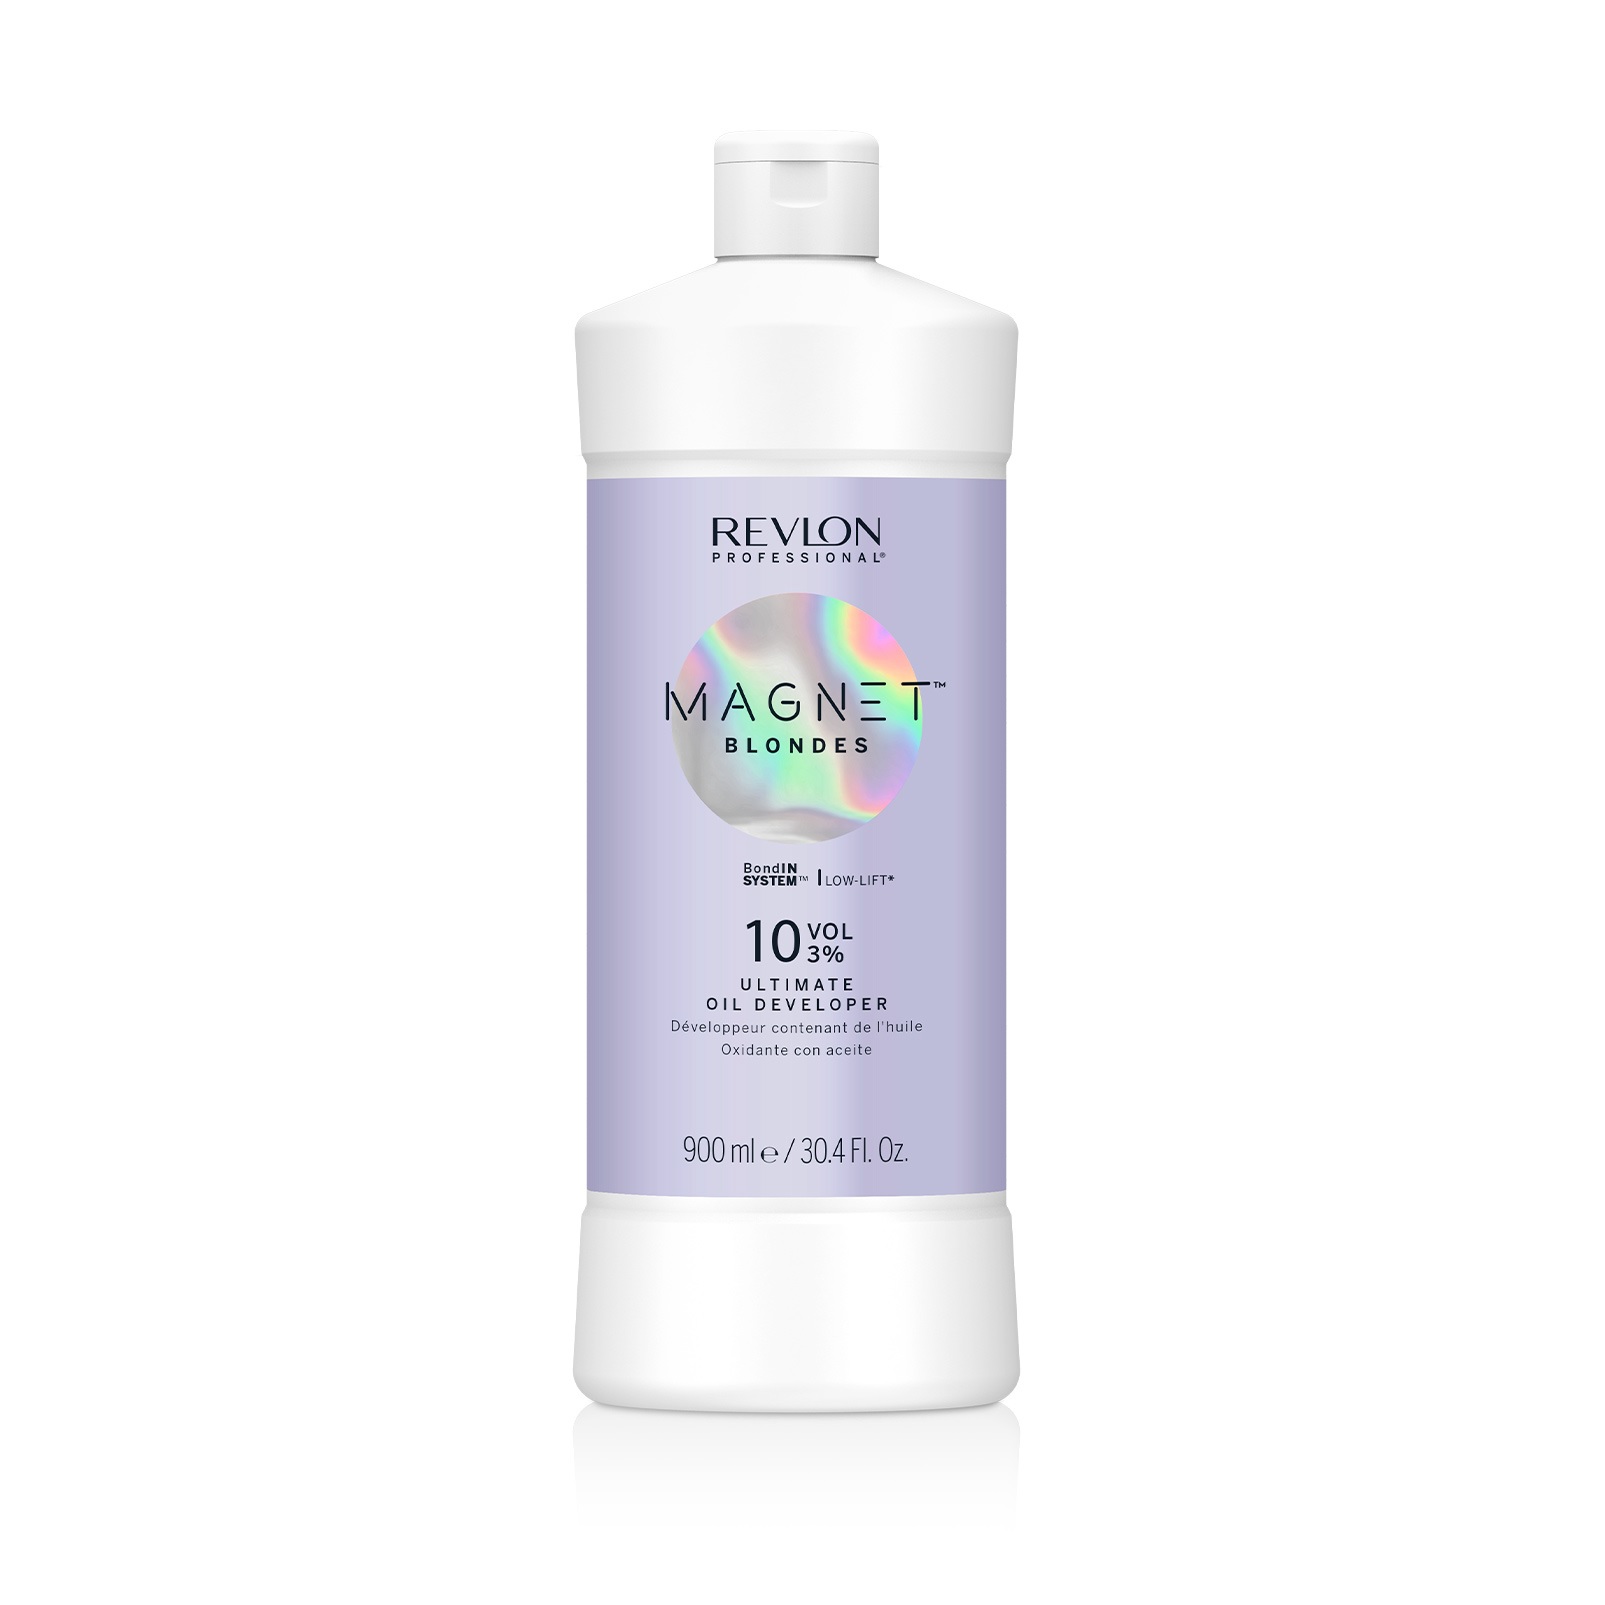 REVLON, Крем-пероксид с добавлением масла 3% Ultimate Oil Developer 10 Vol Magnet Blondes, 900 мл.